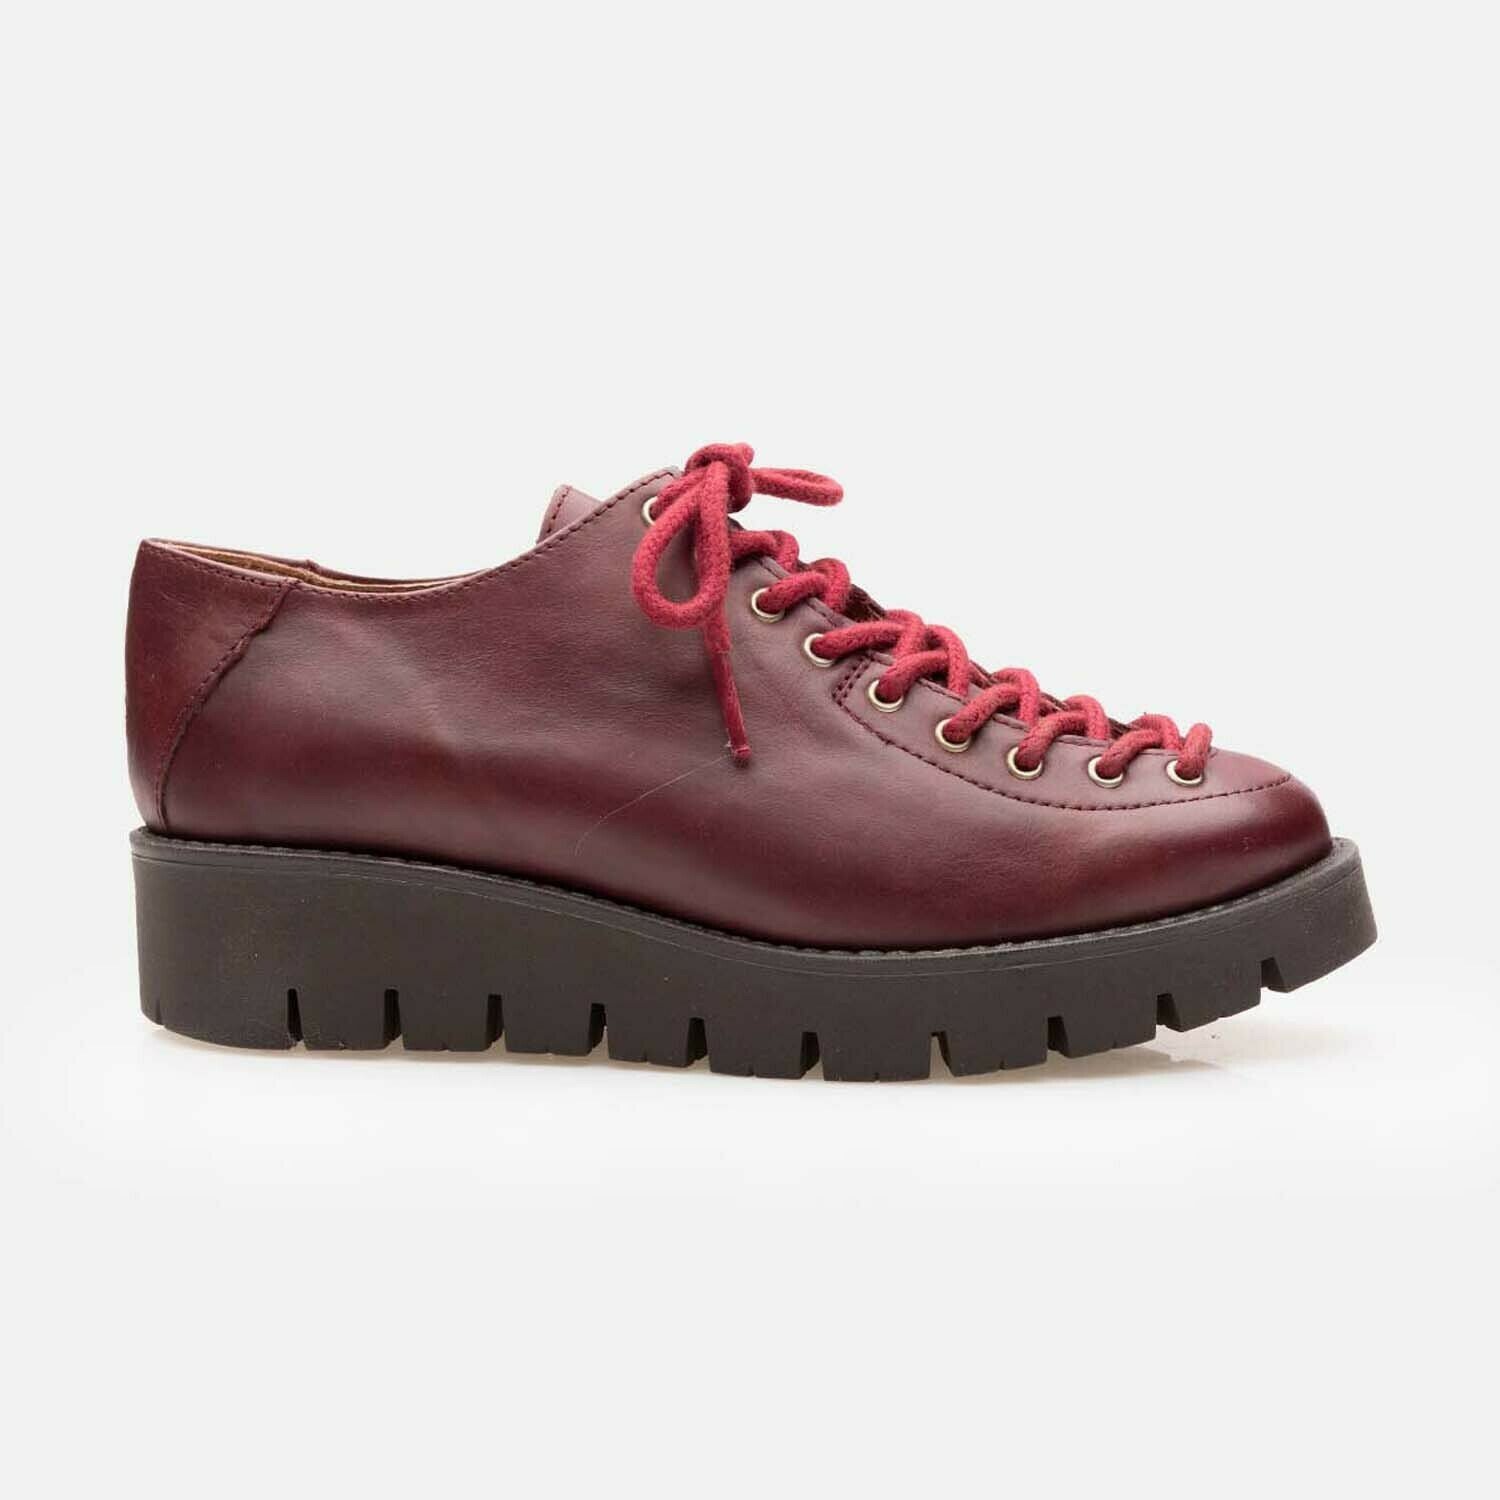 Pantofi casual dama cu siret pana in varf din piele naturala, Leofex - 036 Visiniu Box